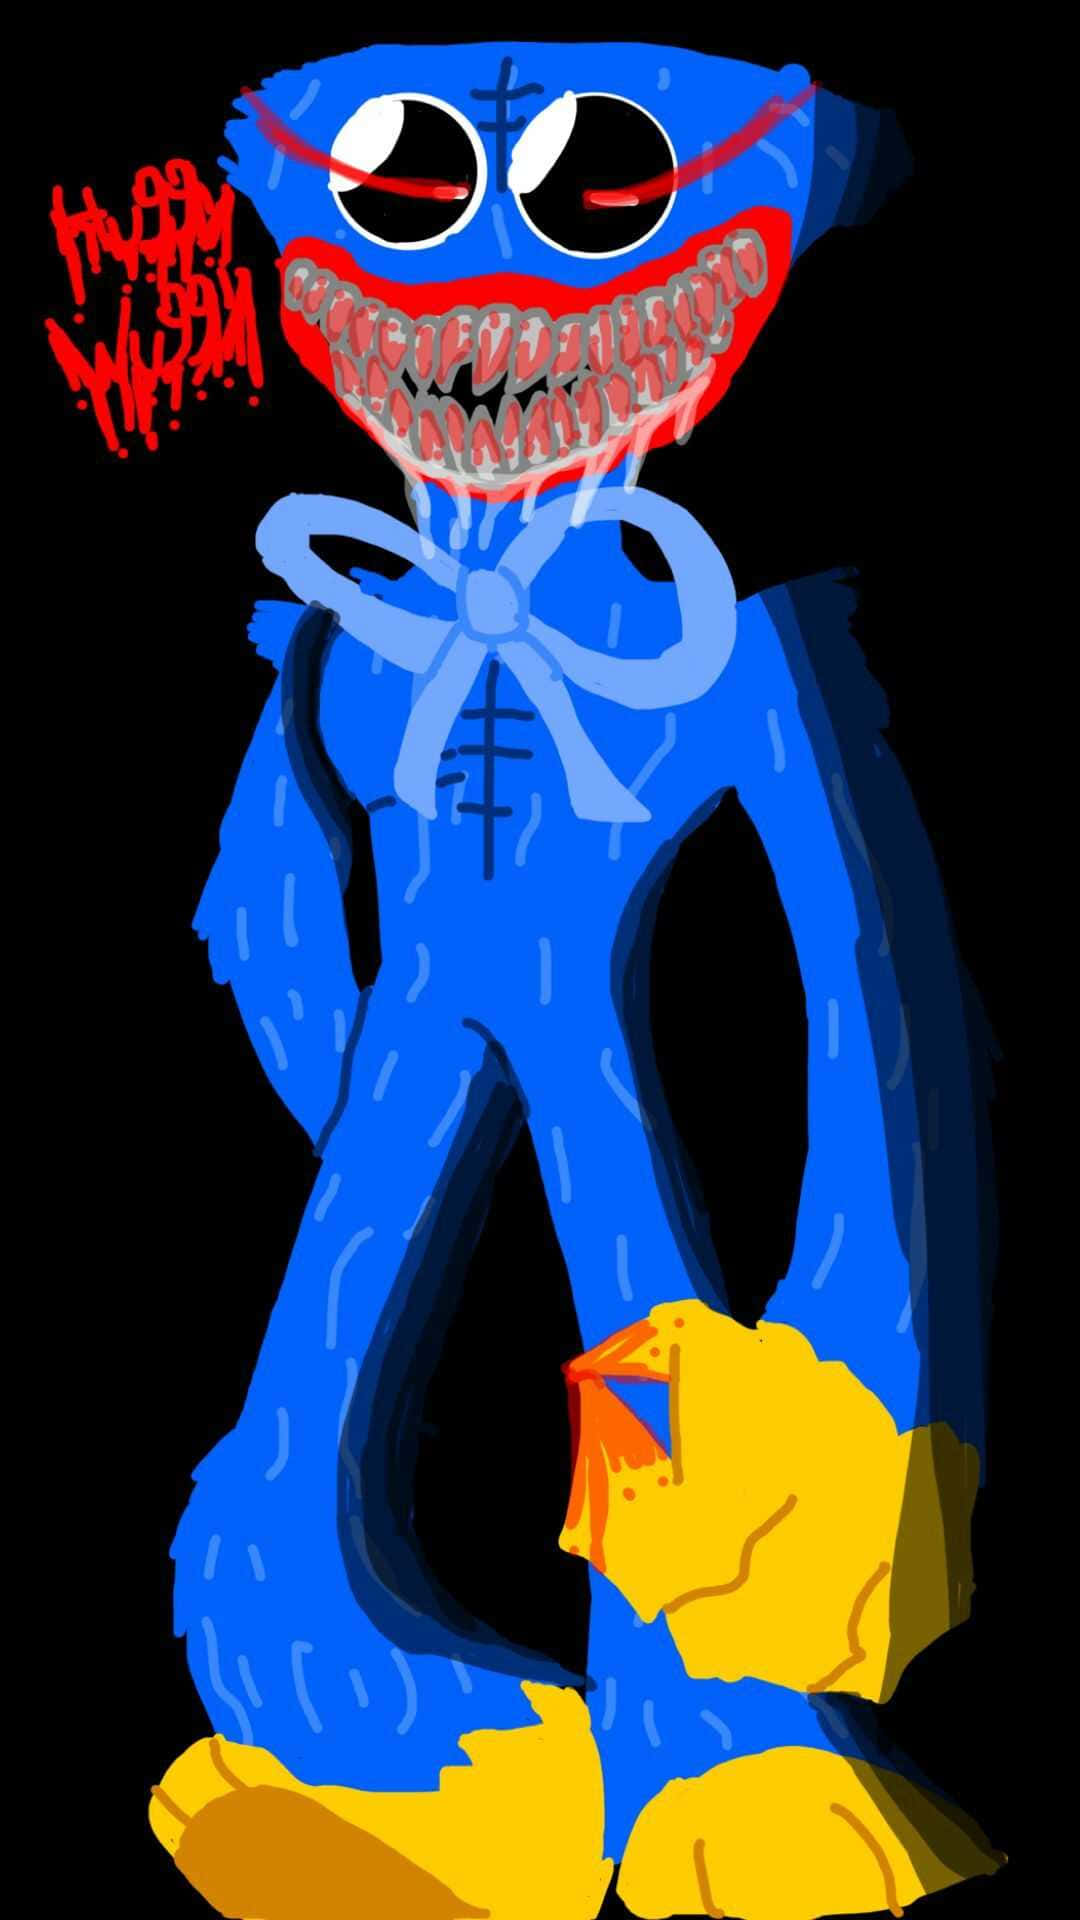 Enblå Tegneseriefigur Med En Gul Mund.